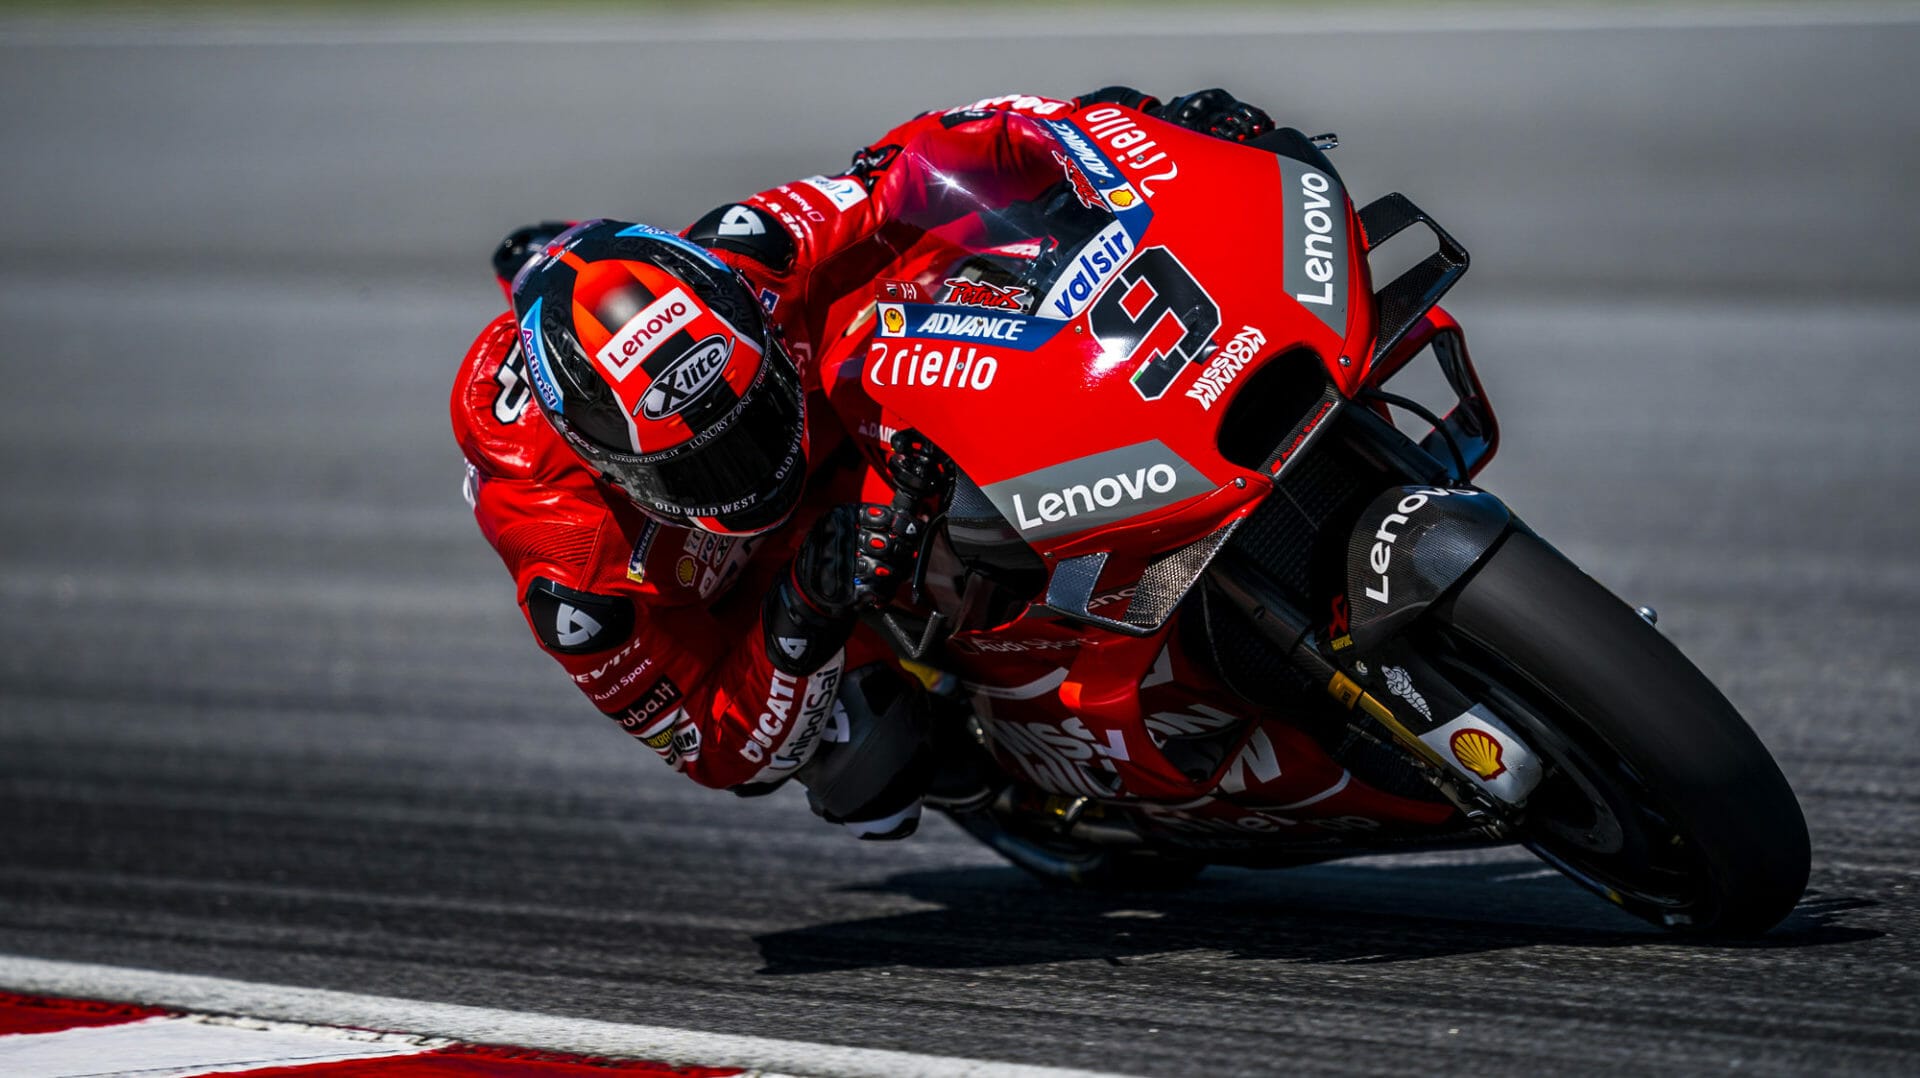 MotoGP: new aerodynamic regulations for 2020